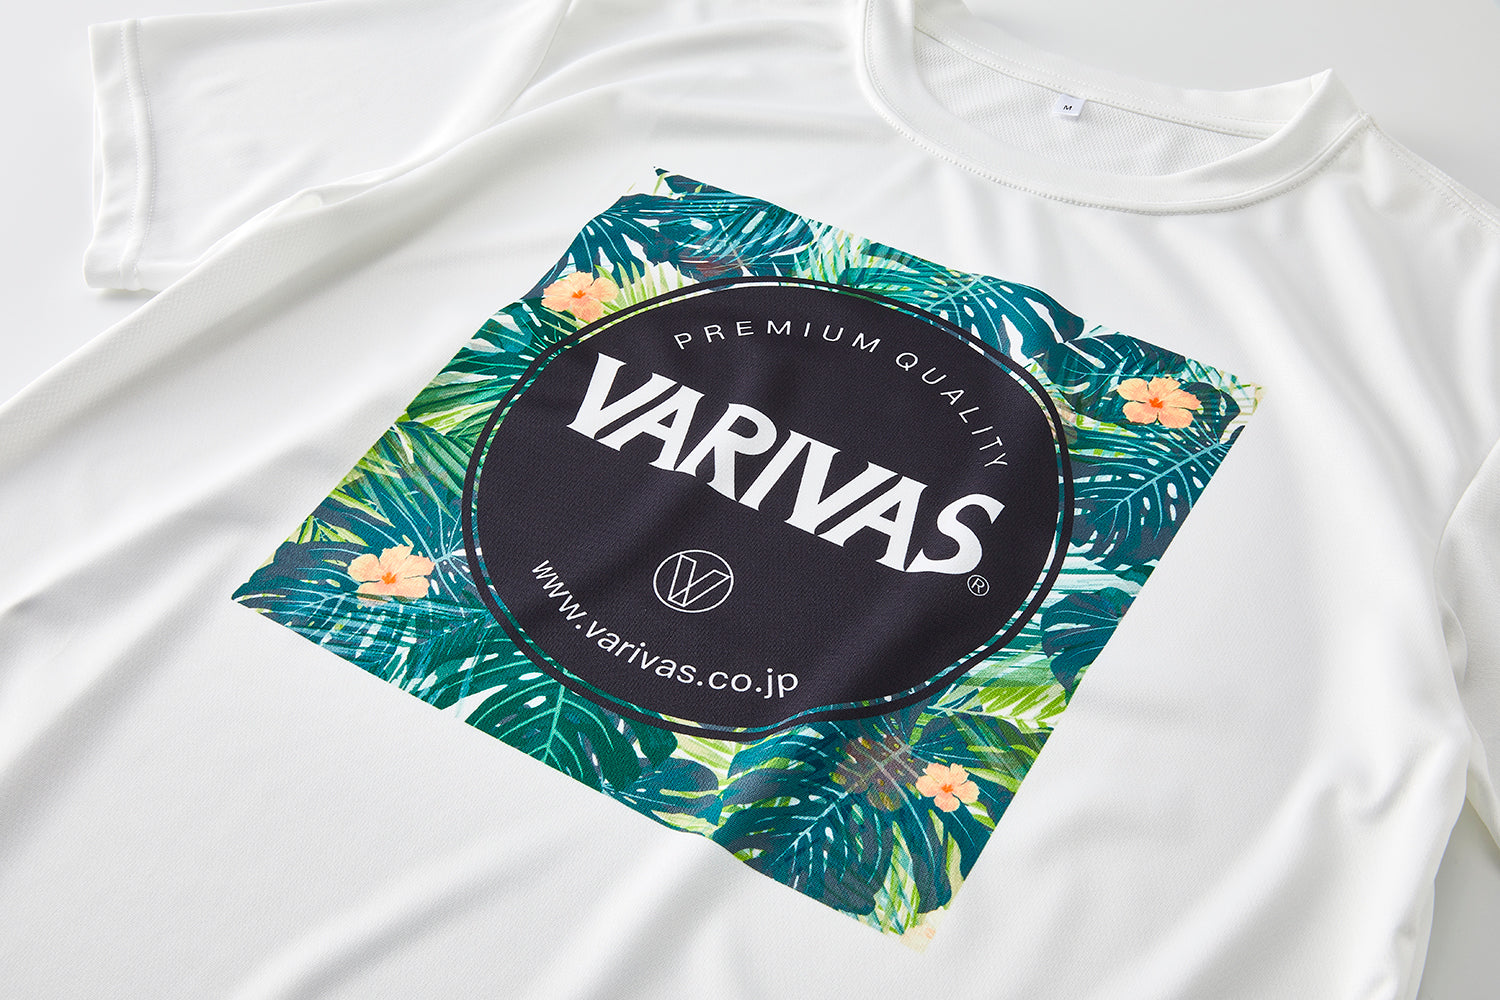 VARIVAS Dry T-Shirts VAT-46